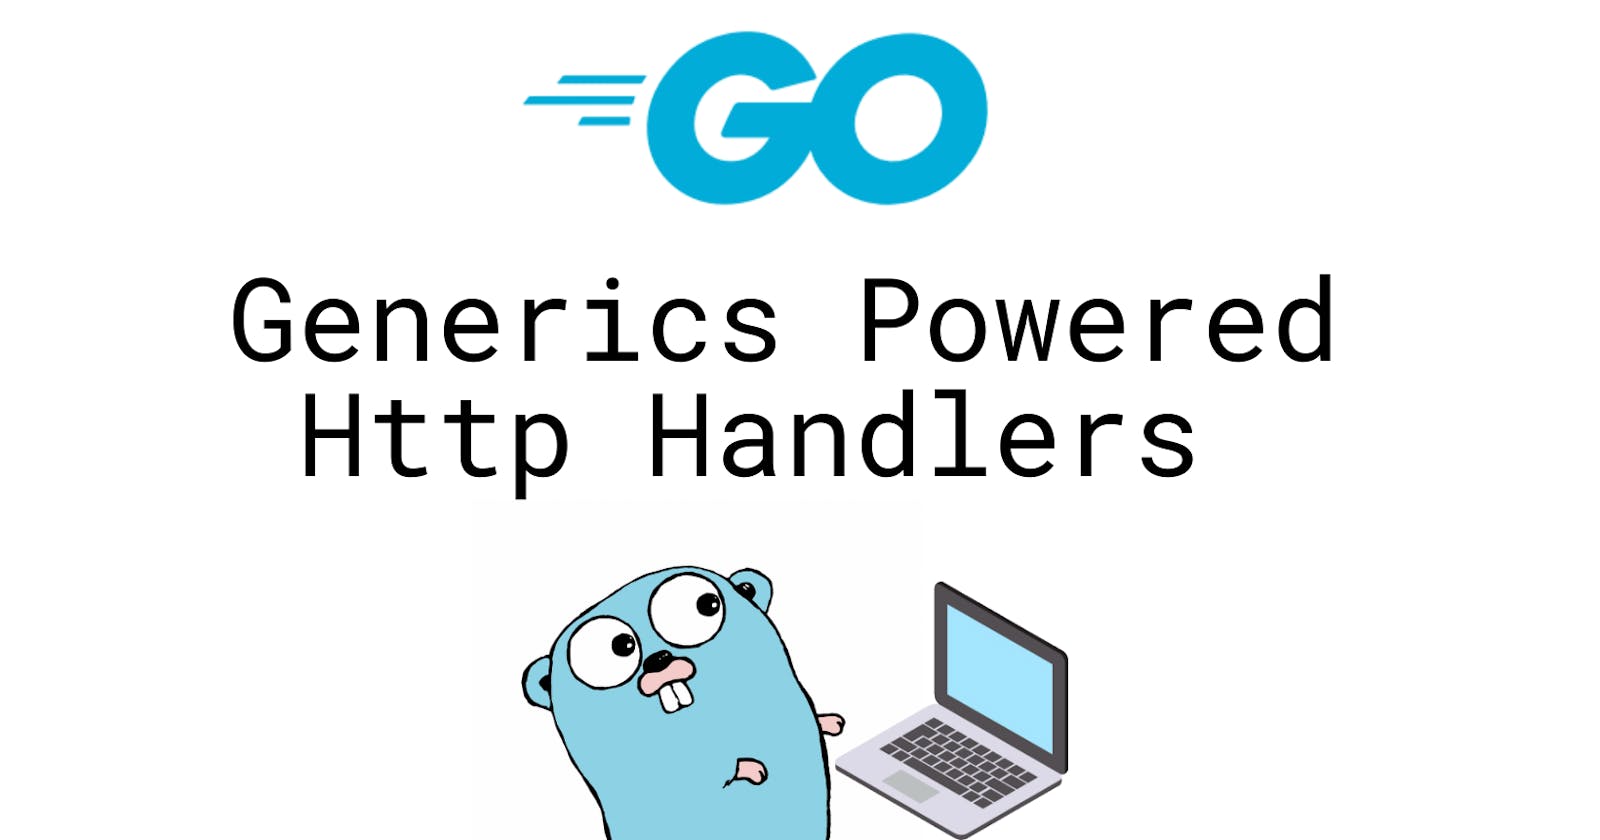 Go - Generics powered http handlers